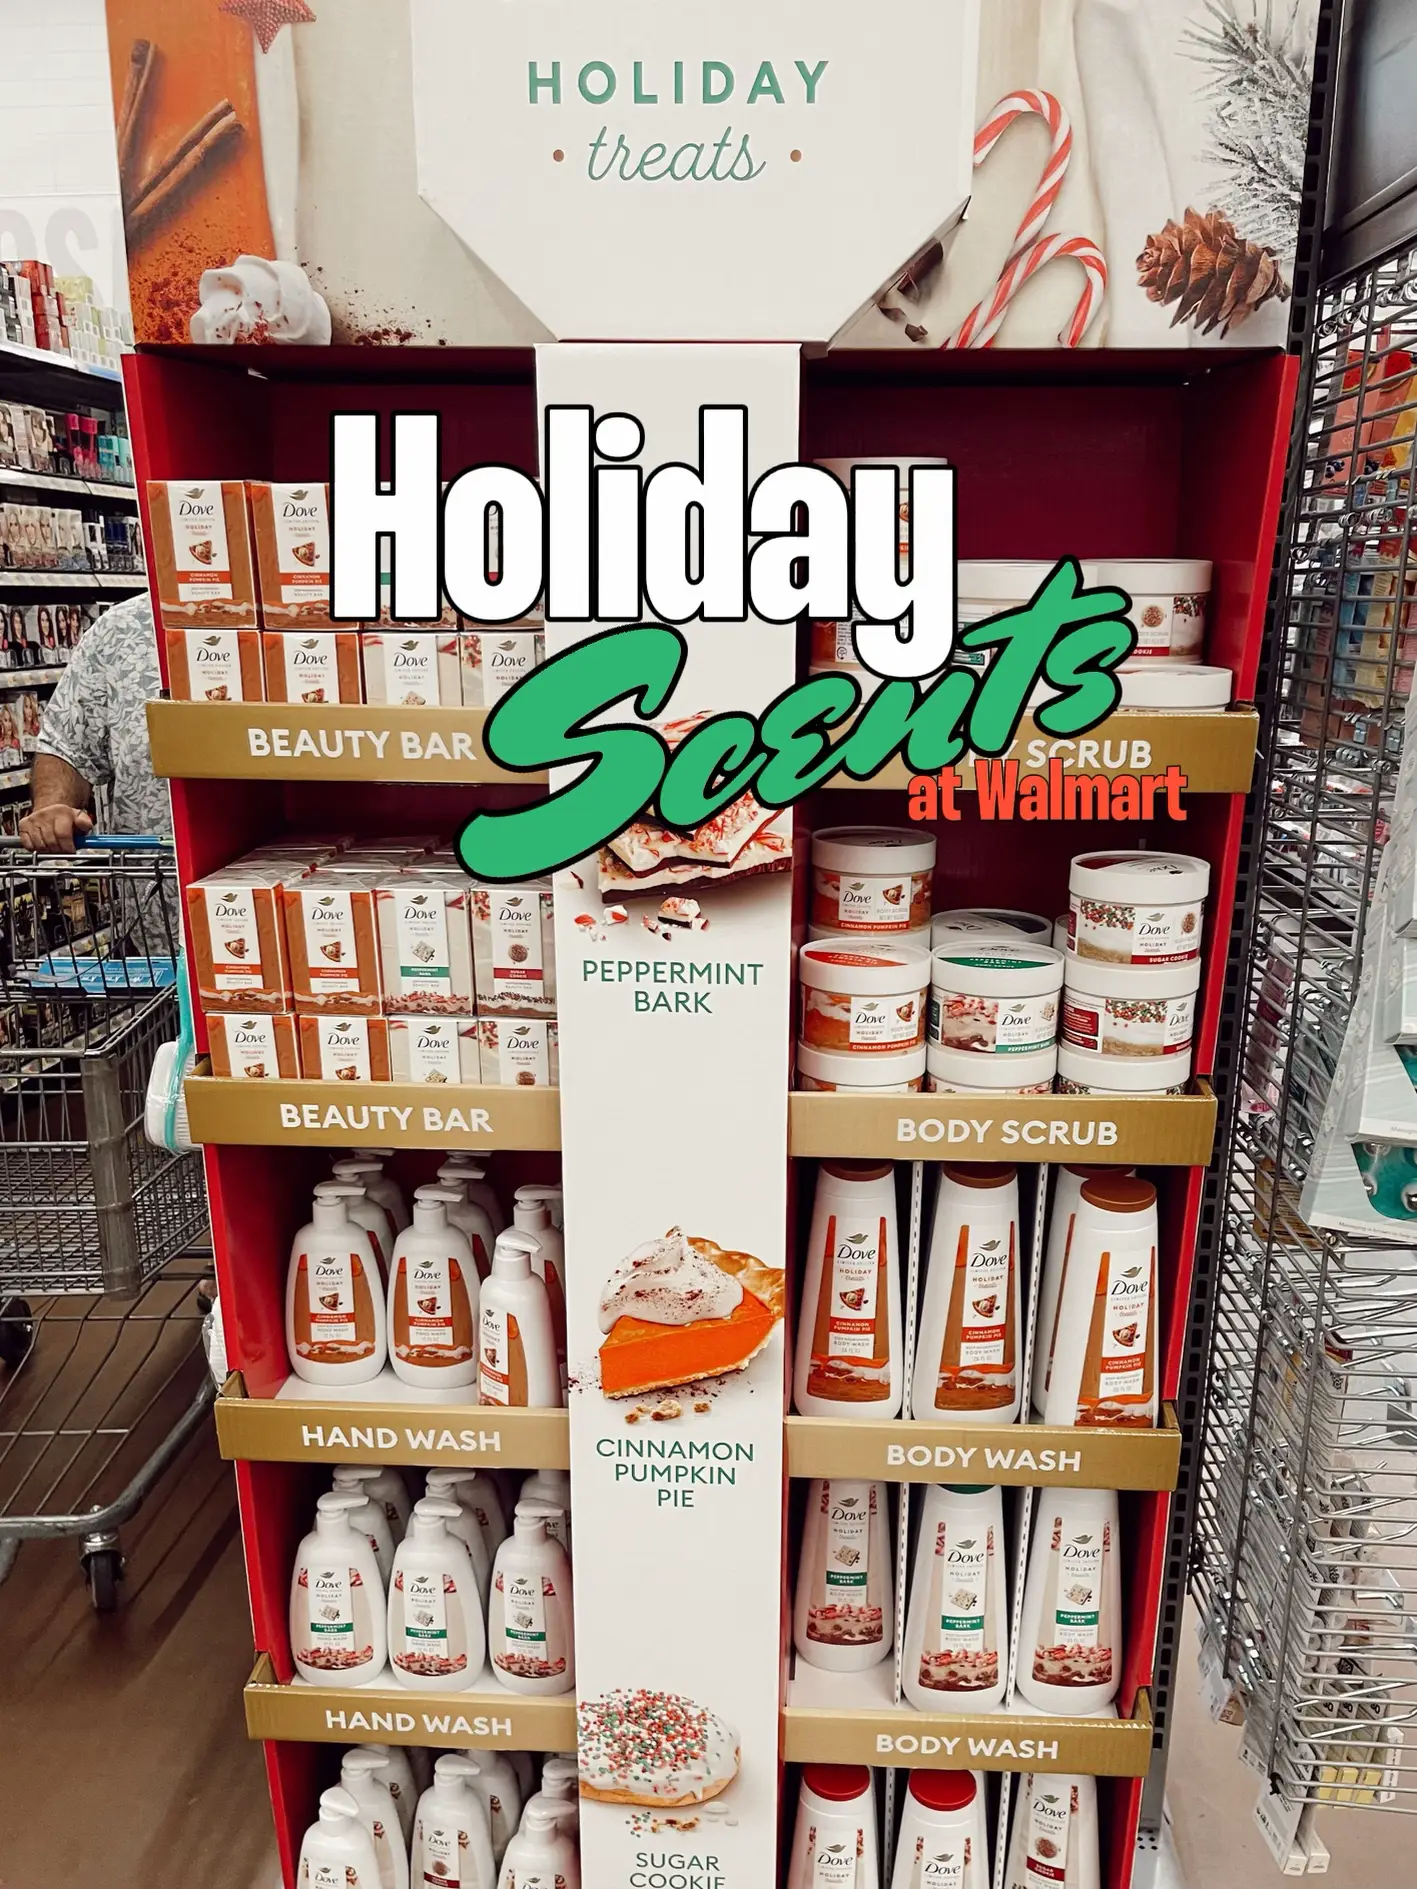  A display of holiday scents and treats at a Walmart.